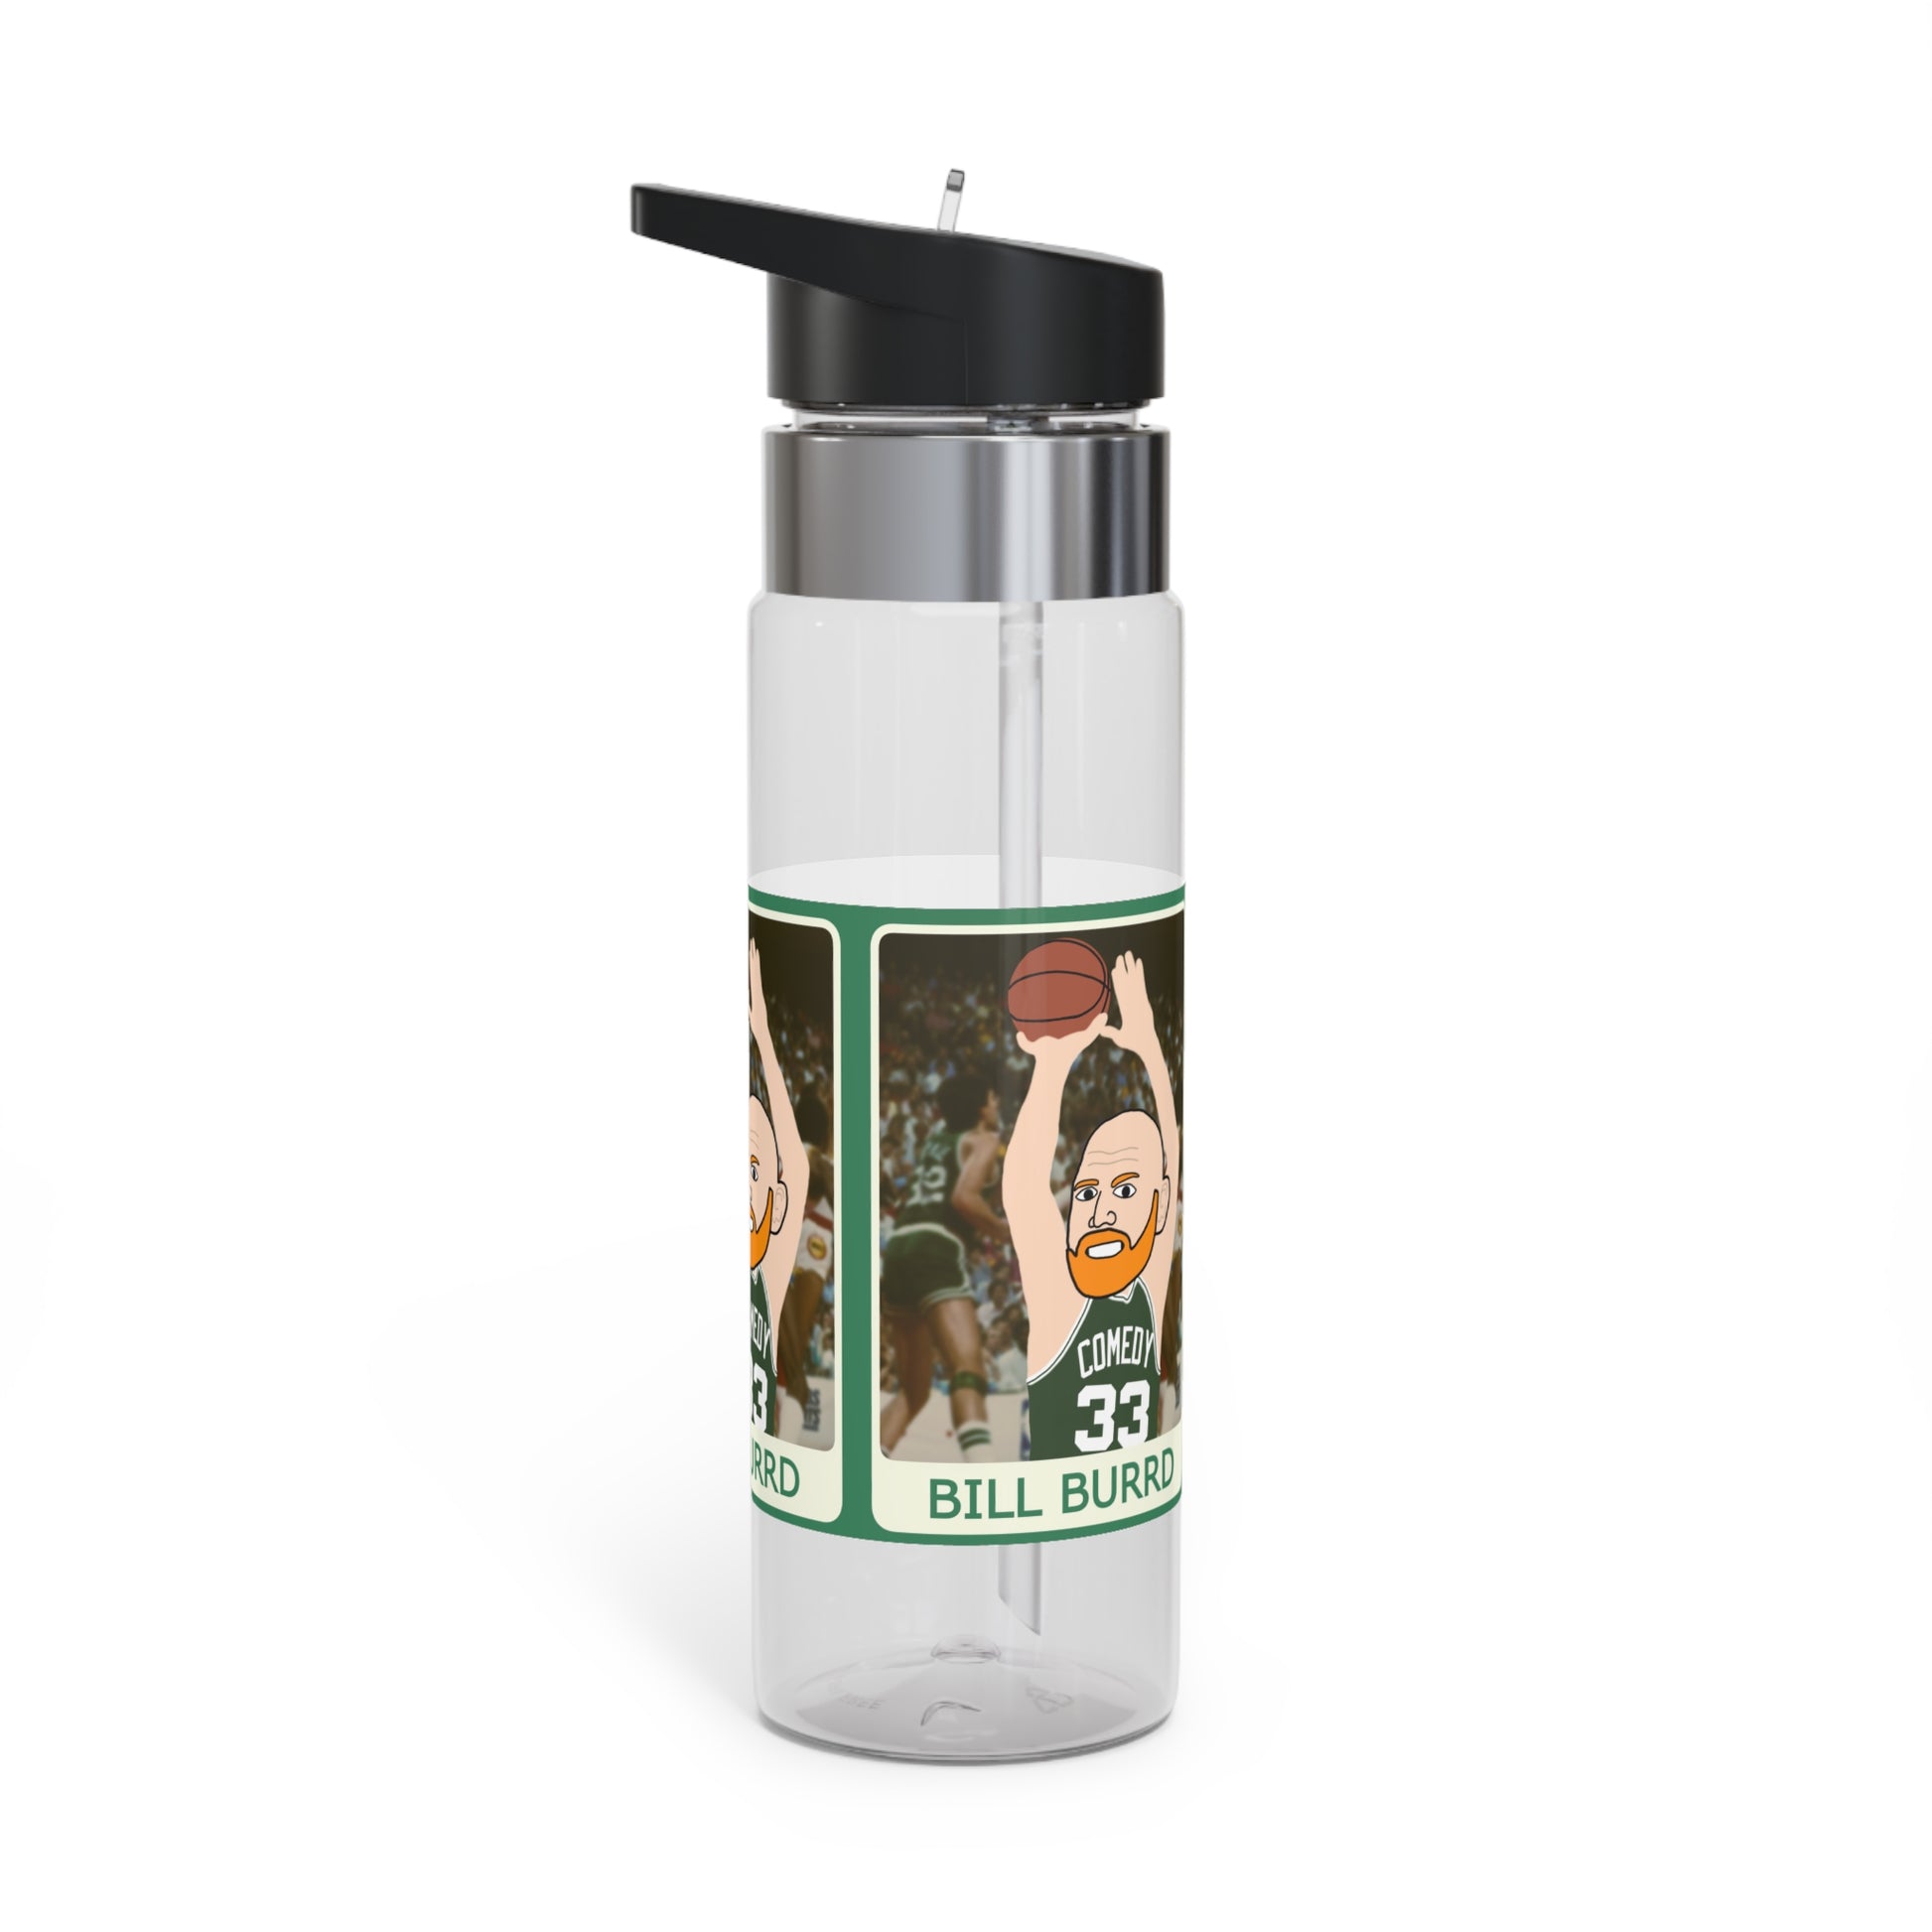 Bill Burrd Boston Celtics Larry Bird Bill Burr Sport Water Bottle, 20oz Next Cult Brand